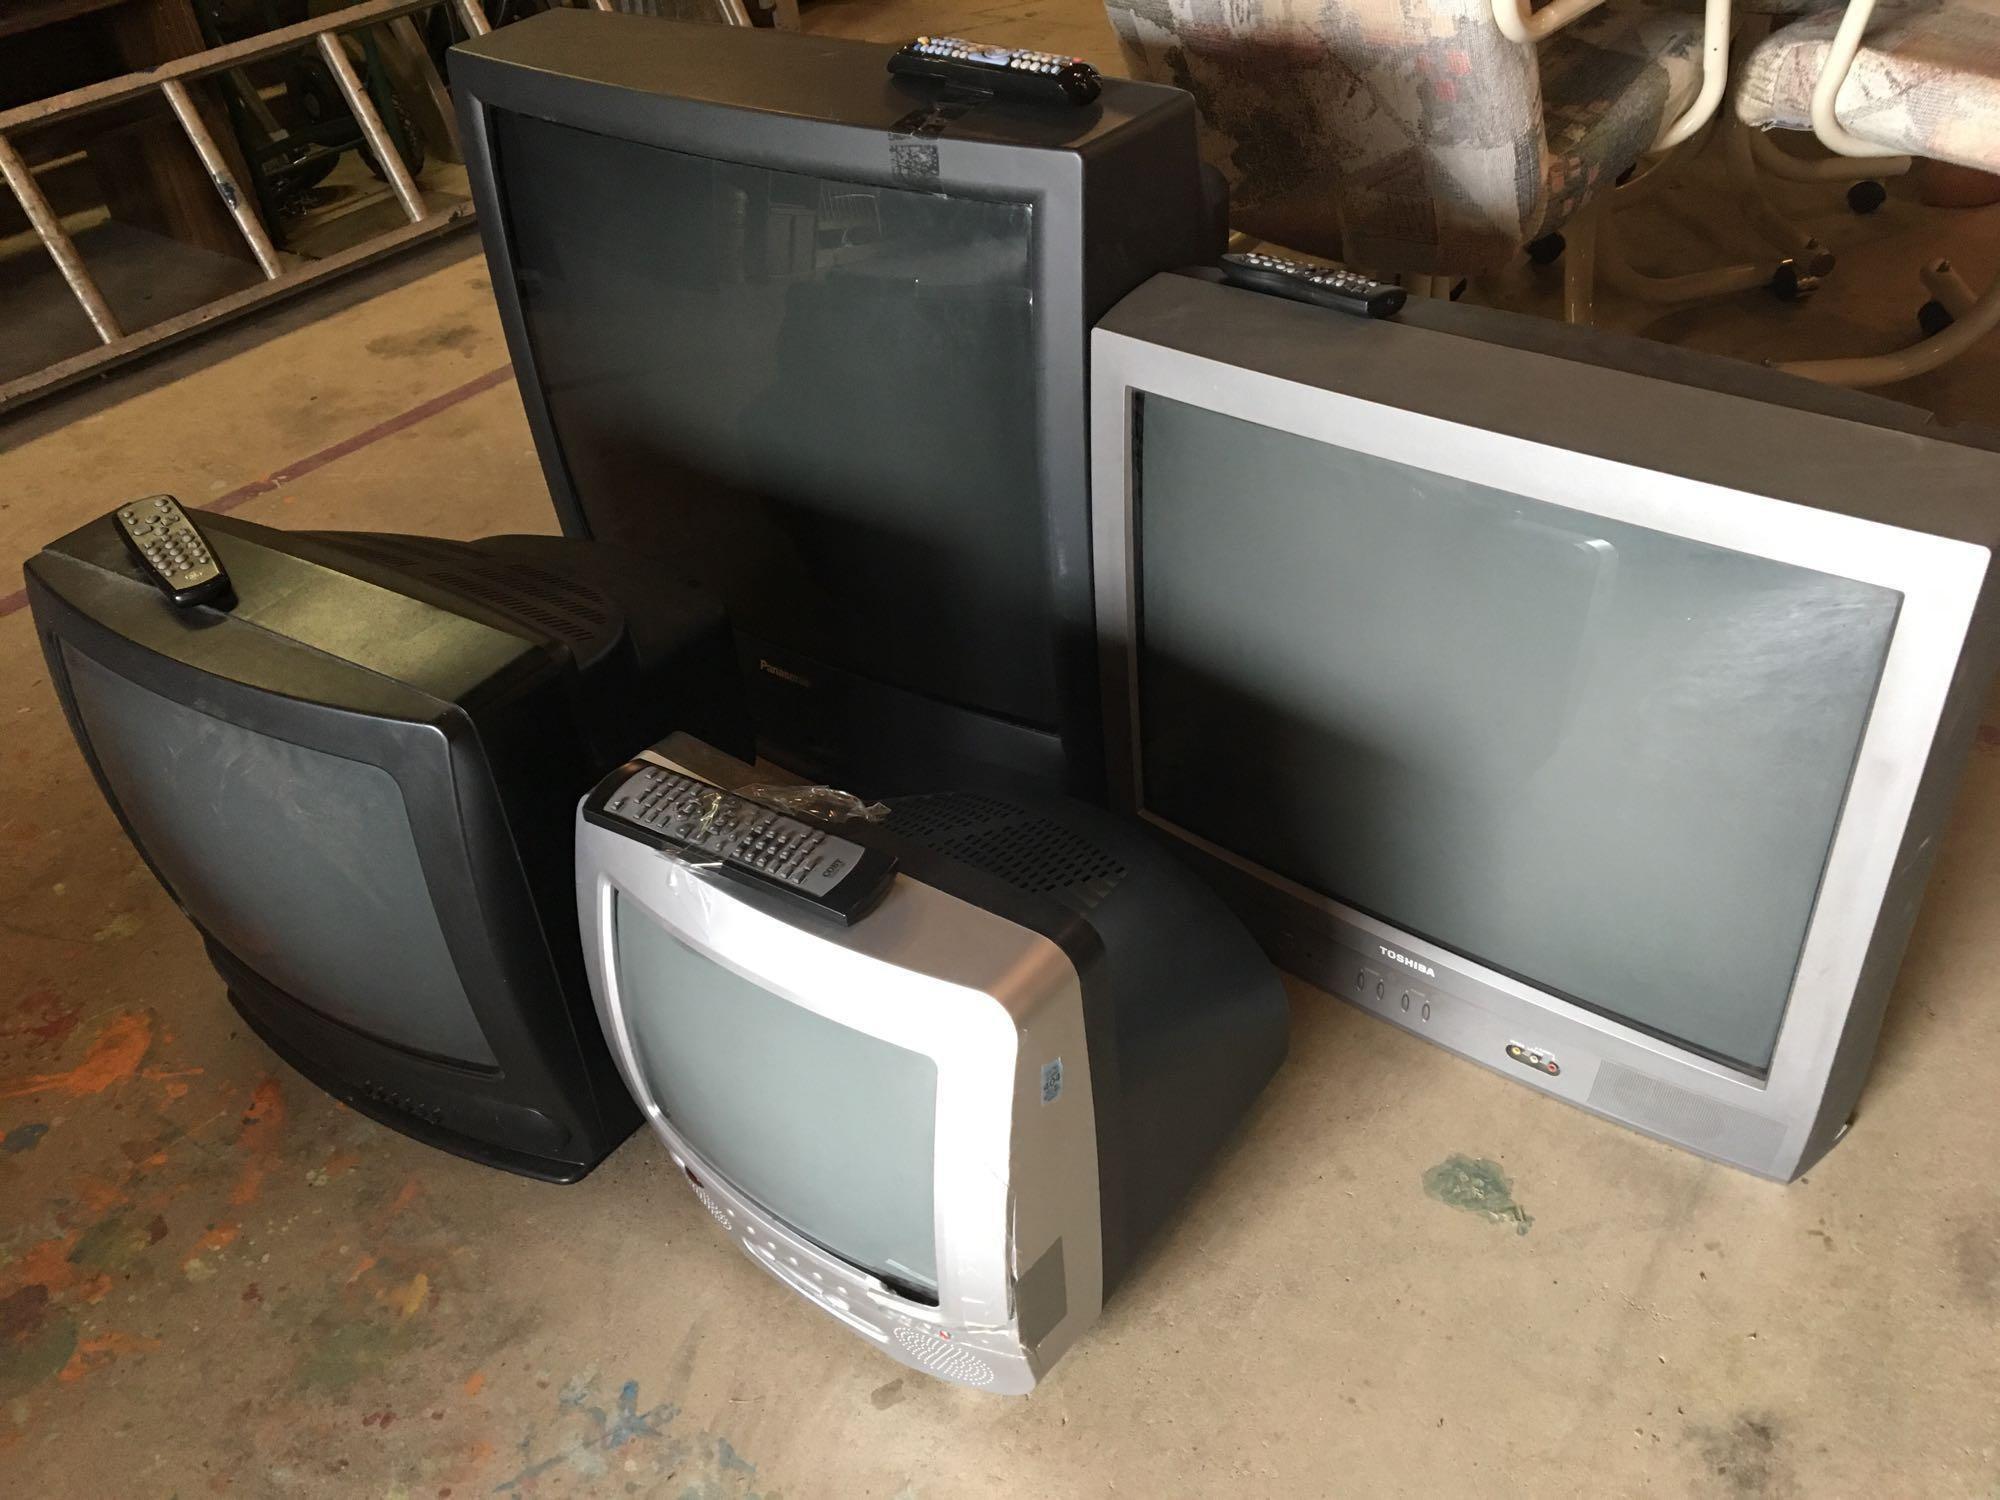 PANSONIC 32 inch TV, TOSHIBA 27" TV, GE 19"TV, COBY 12"TV/DVD player